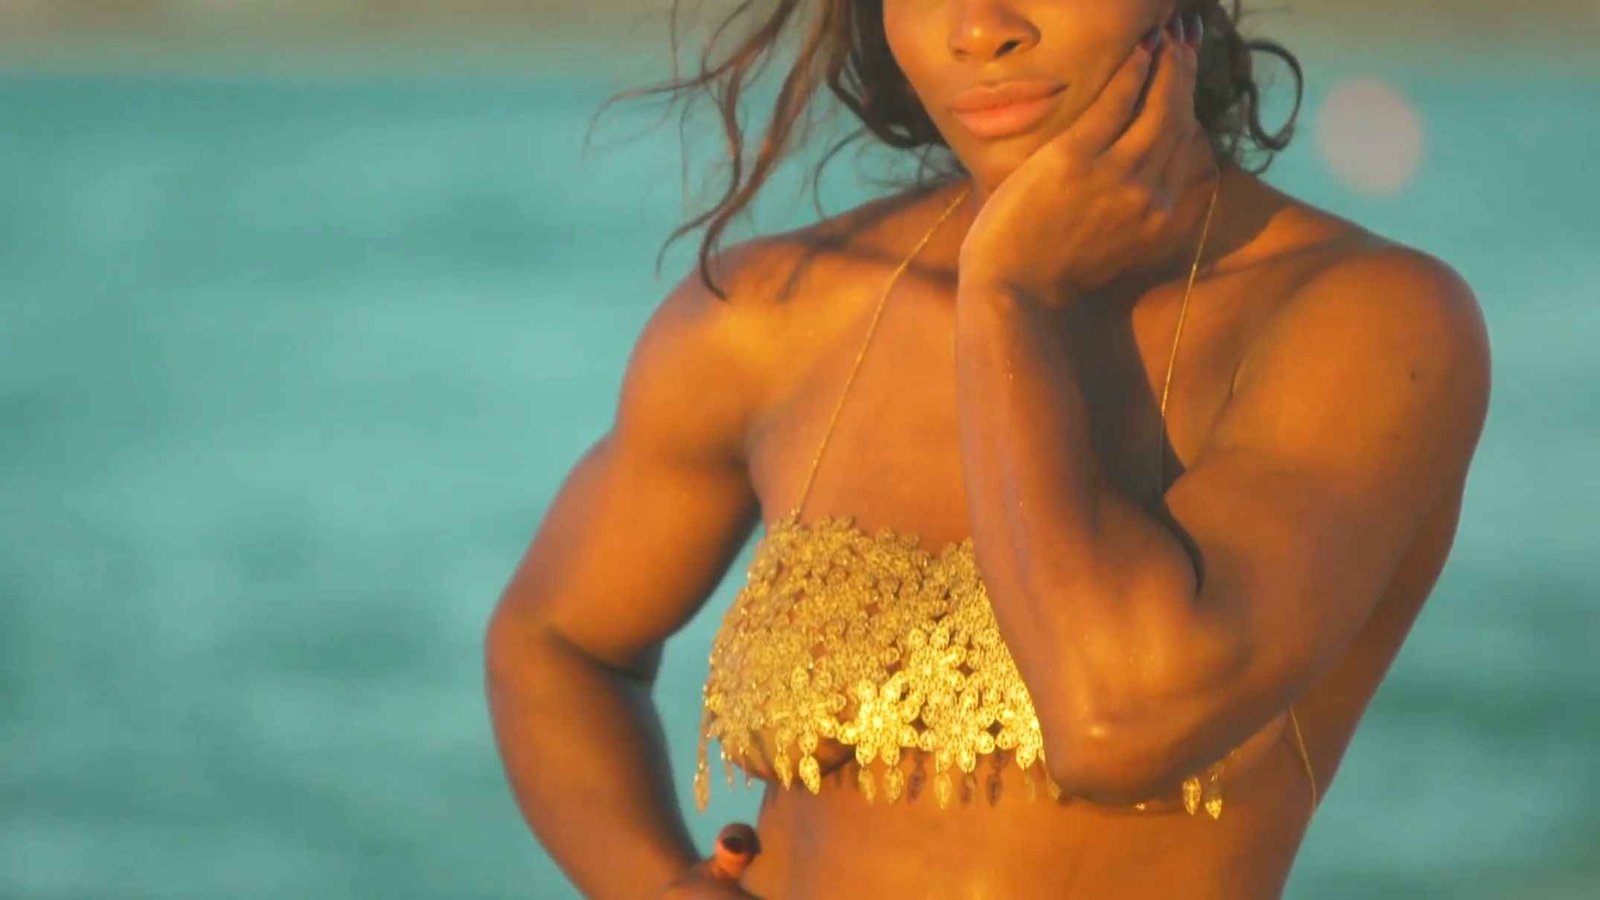 Serena Williams pour Sports Illustrated